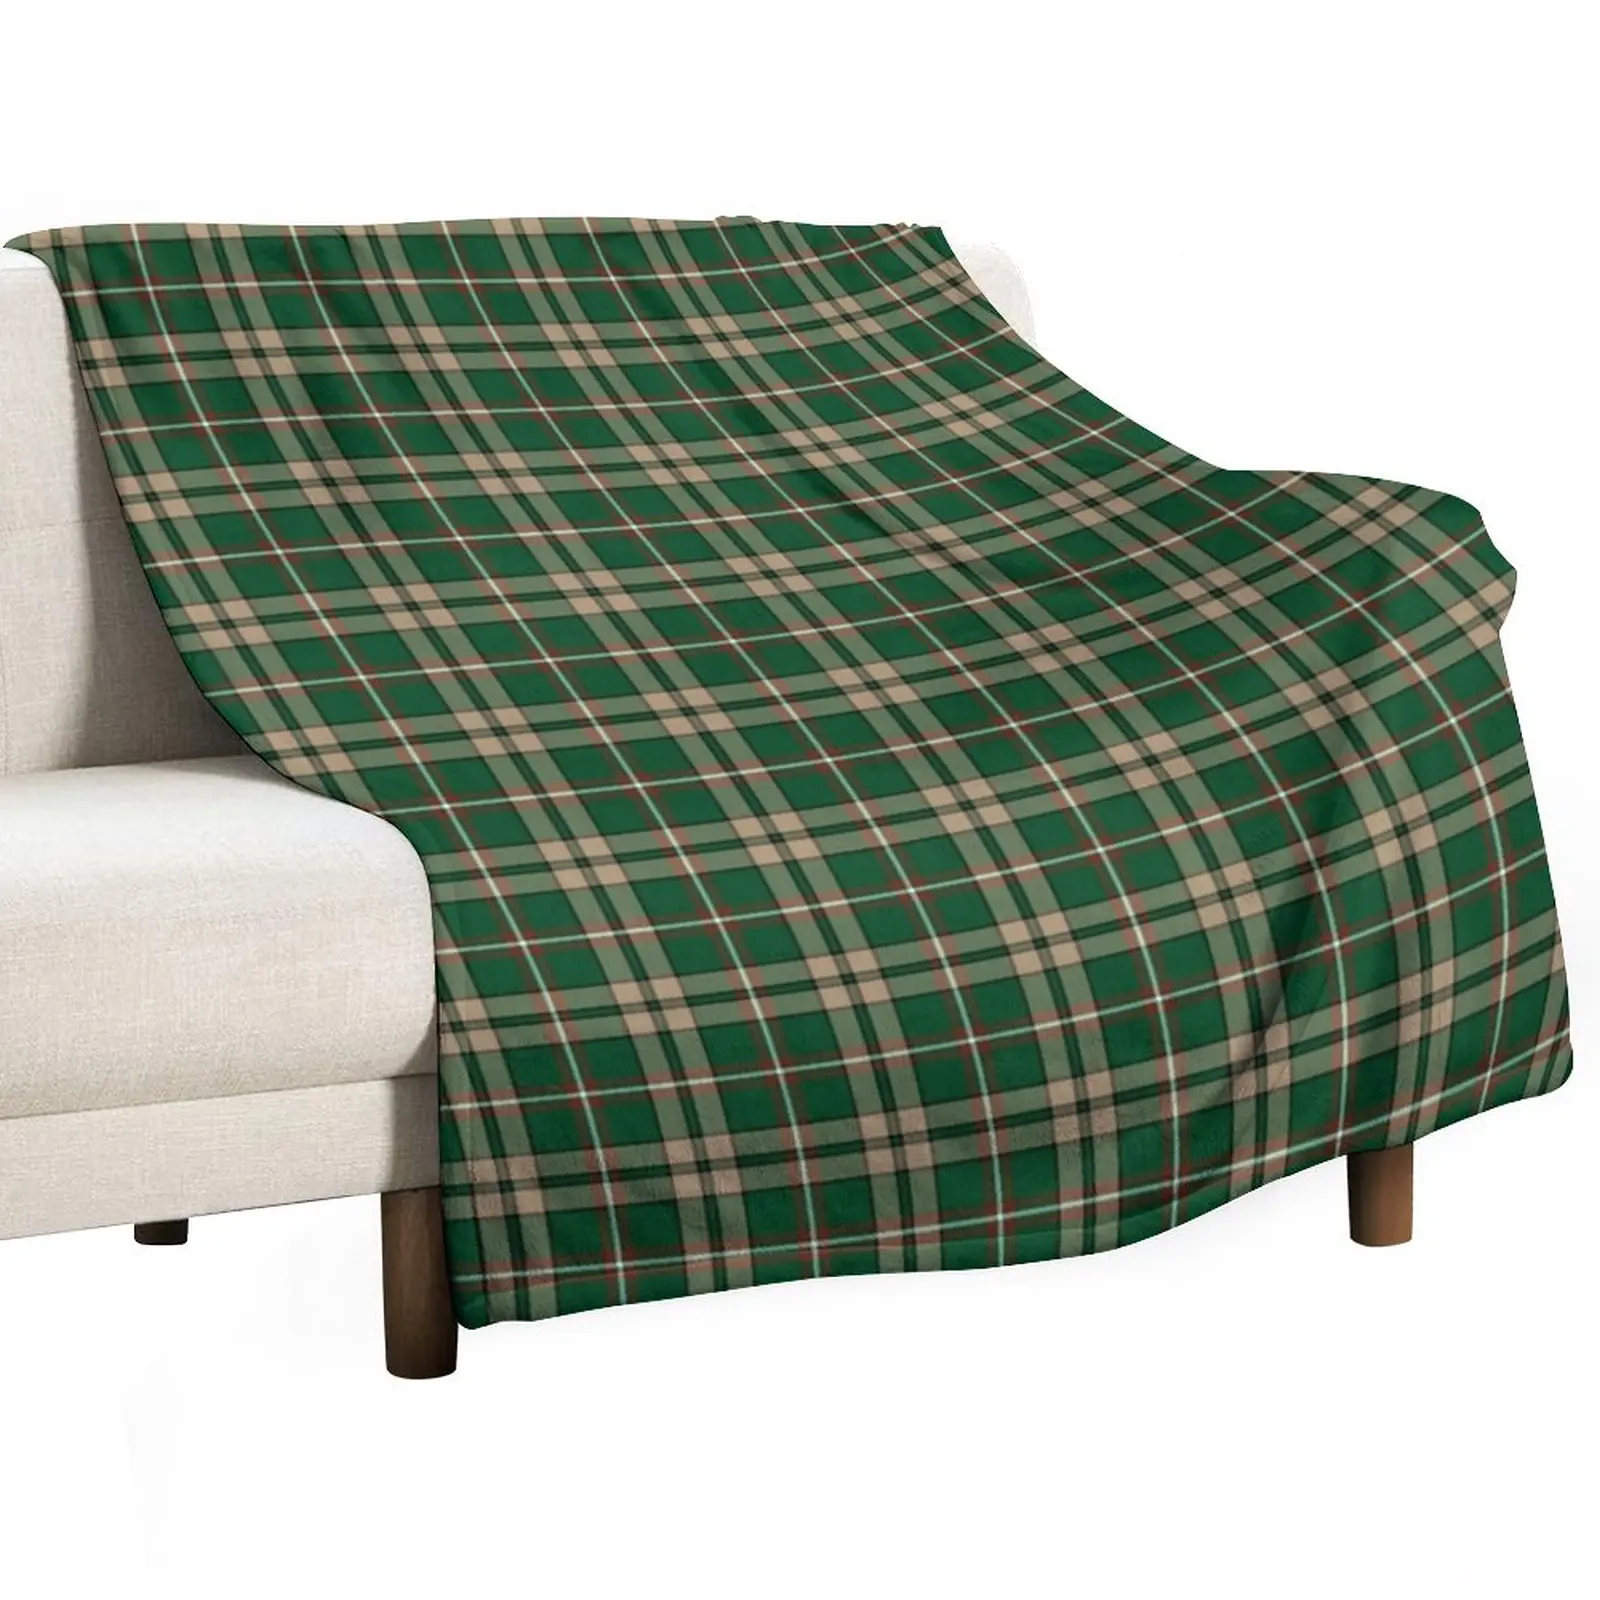 

O'Neill Tartan Tan and Green Irish Plaid Throw Blanket bed plaid Custom Blanket Luxury Blanket Fashion Sofa Blankets